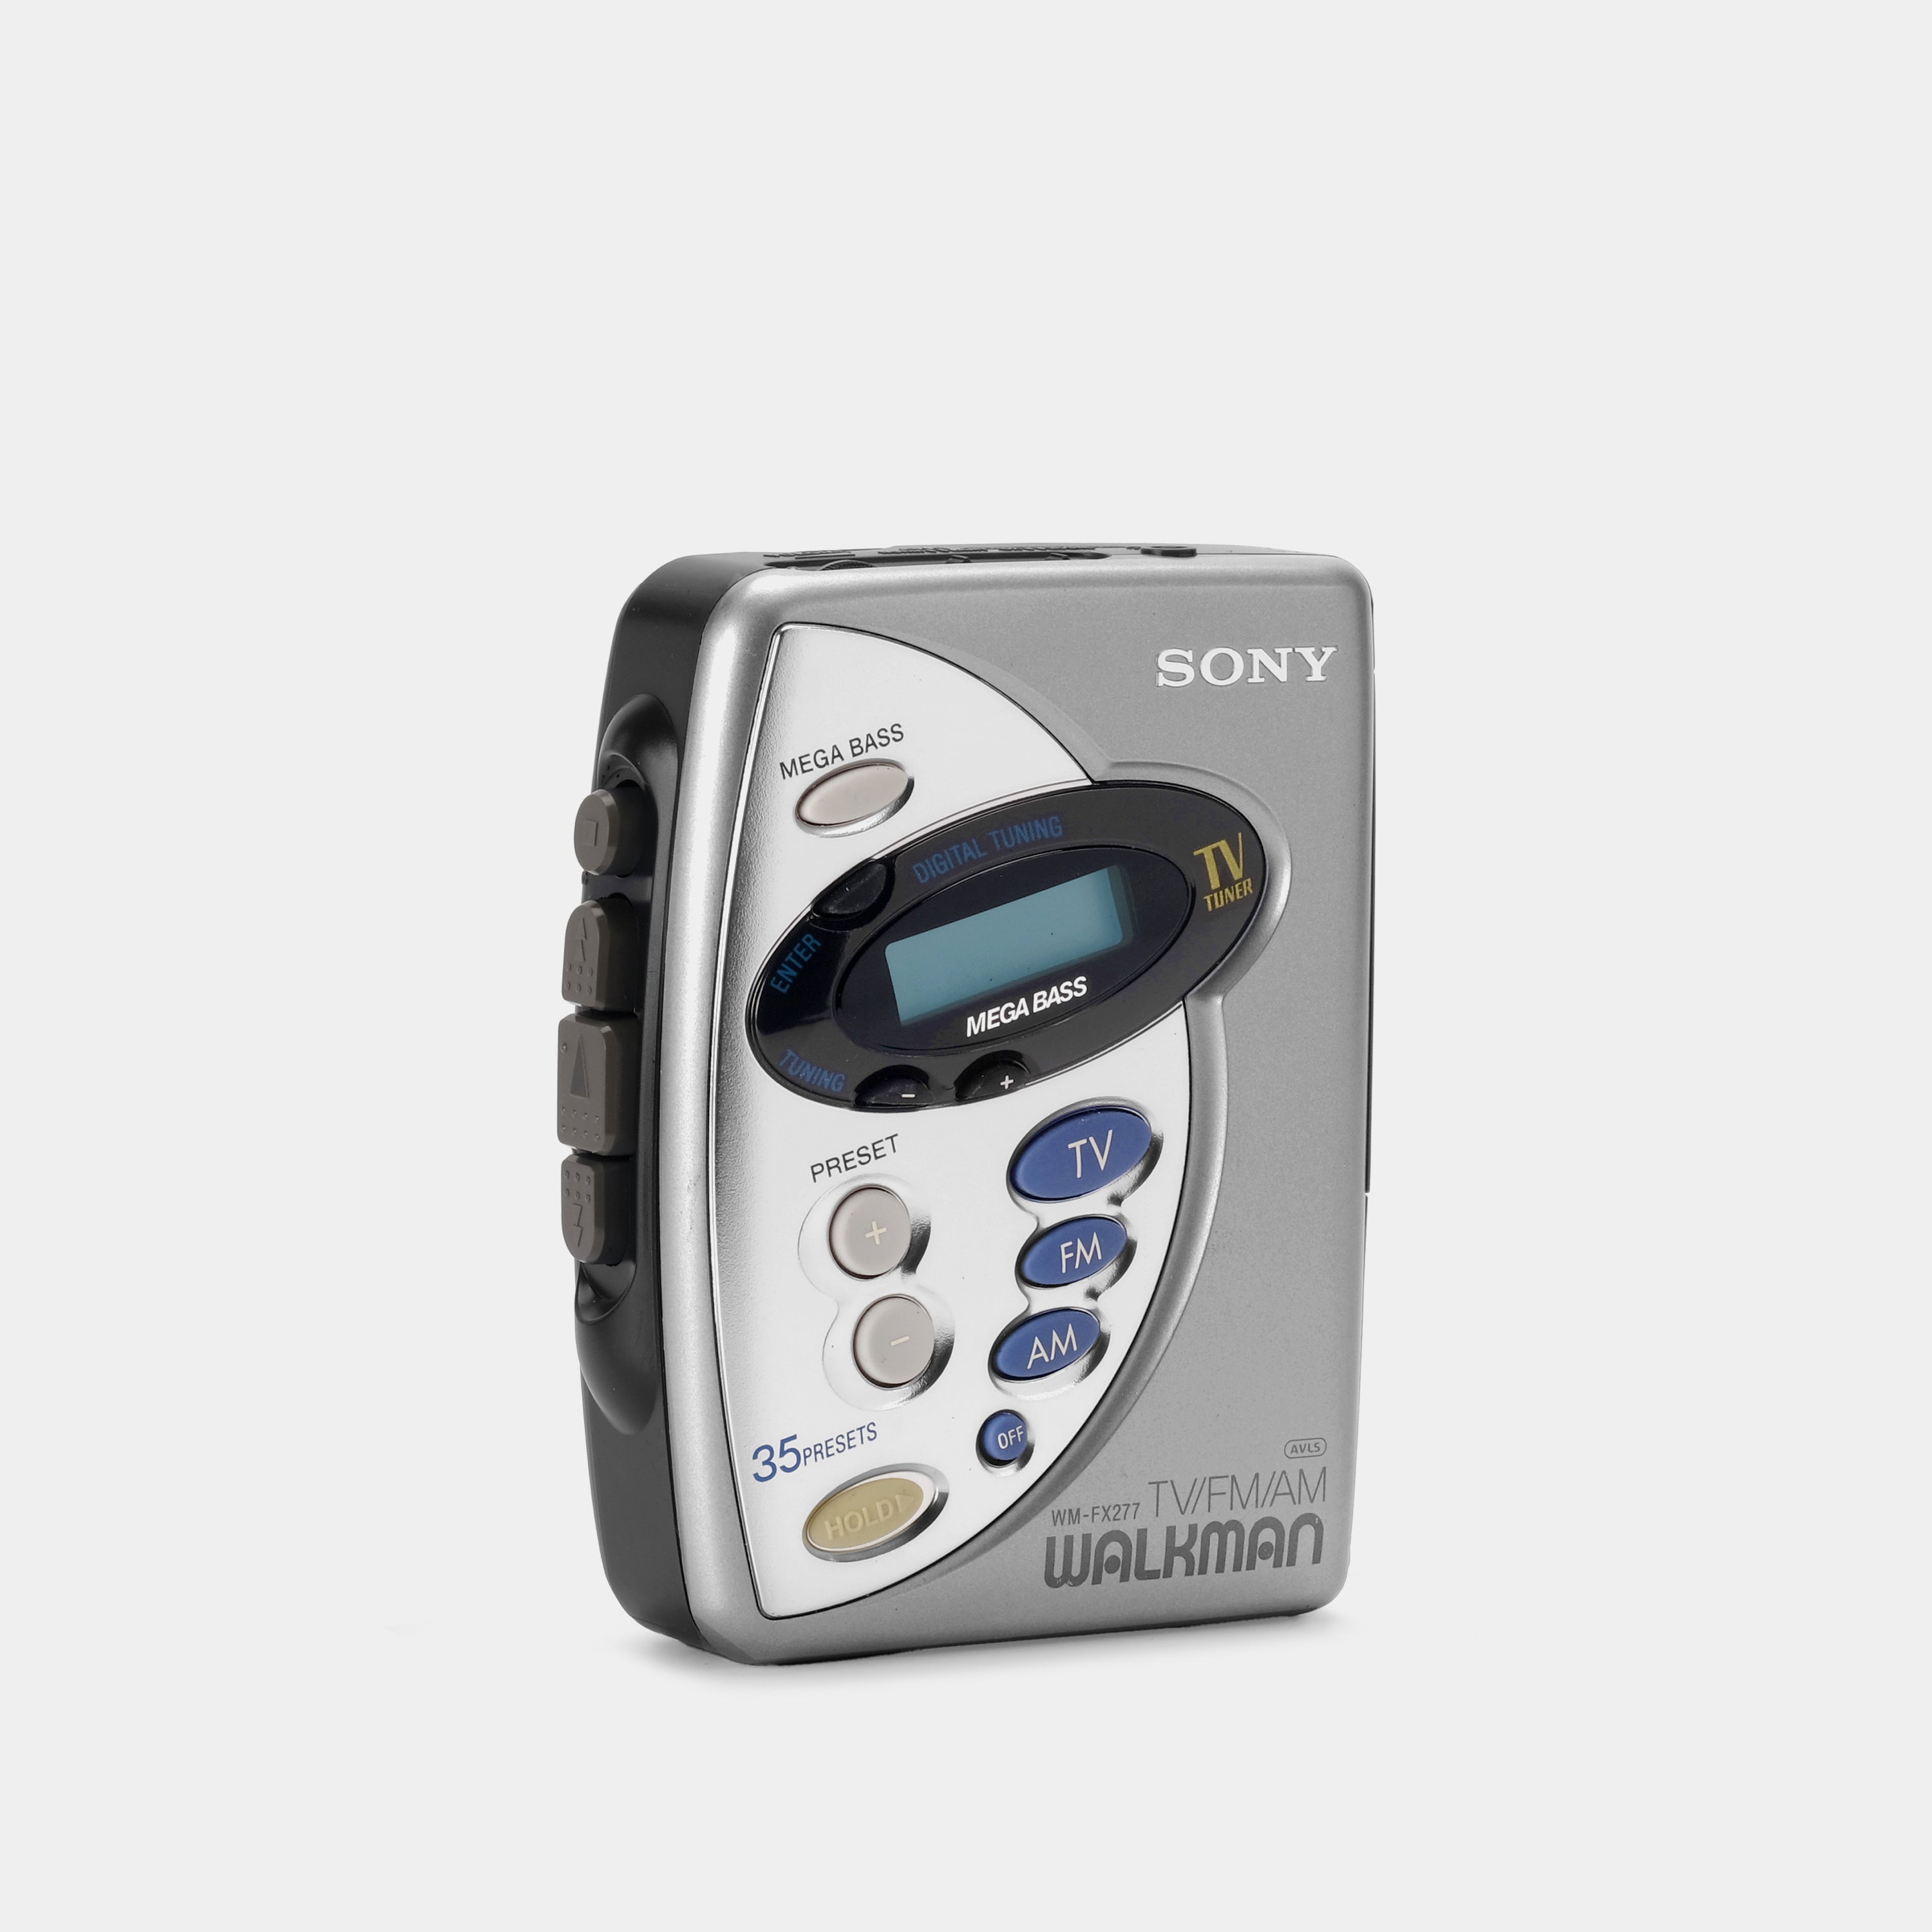 Sony Walkman WM-FX277 TV/AM/FM Portable Cassette Player with Case